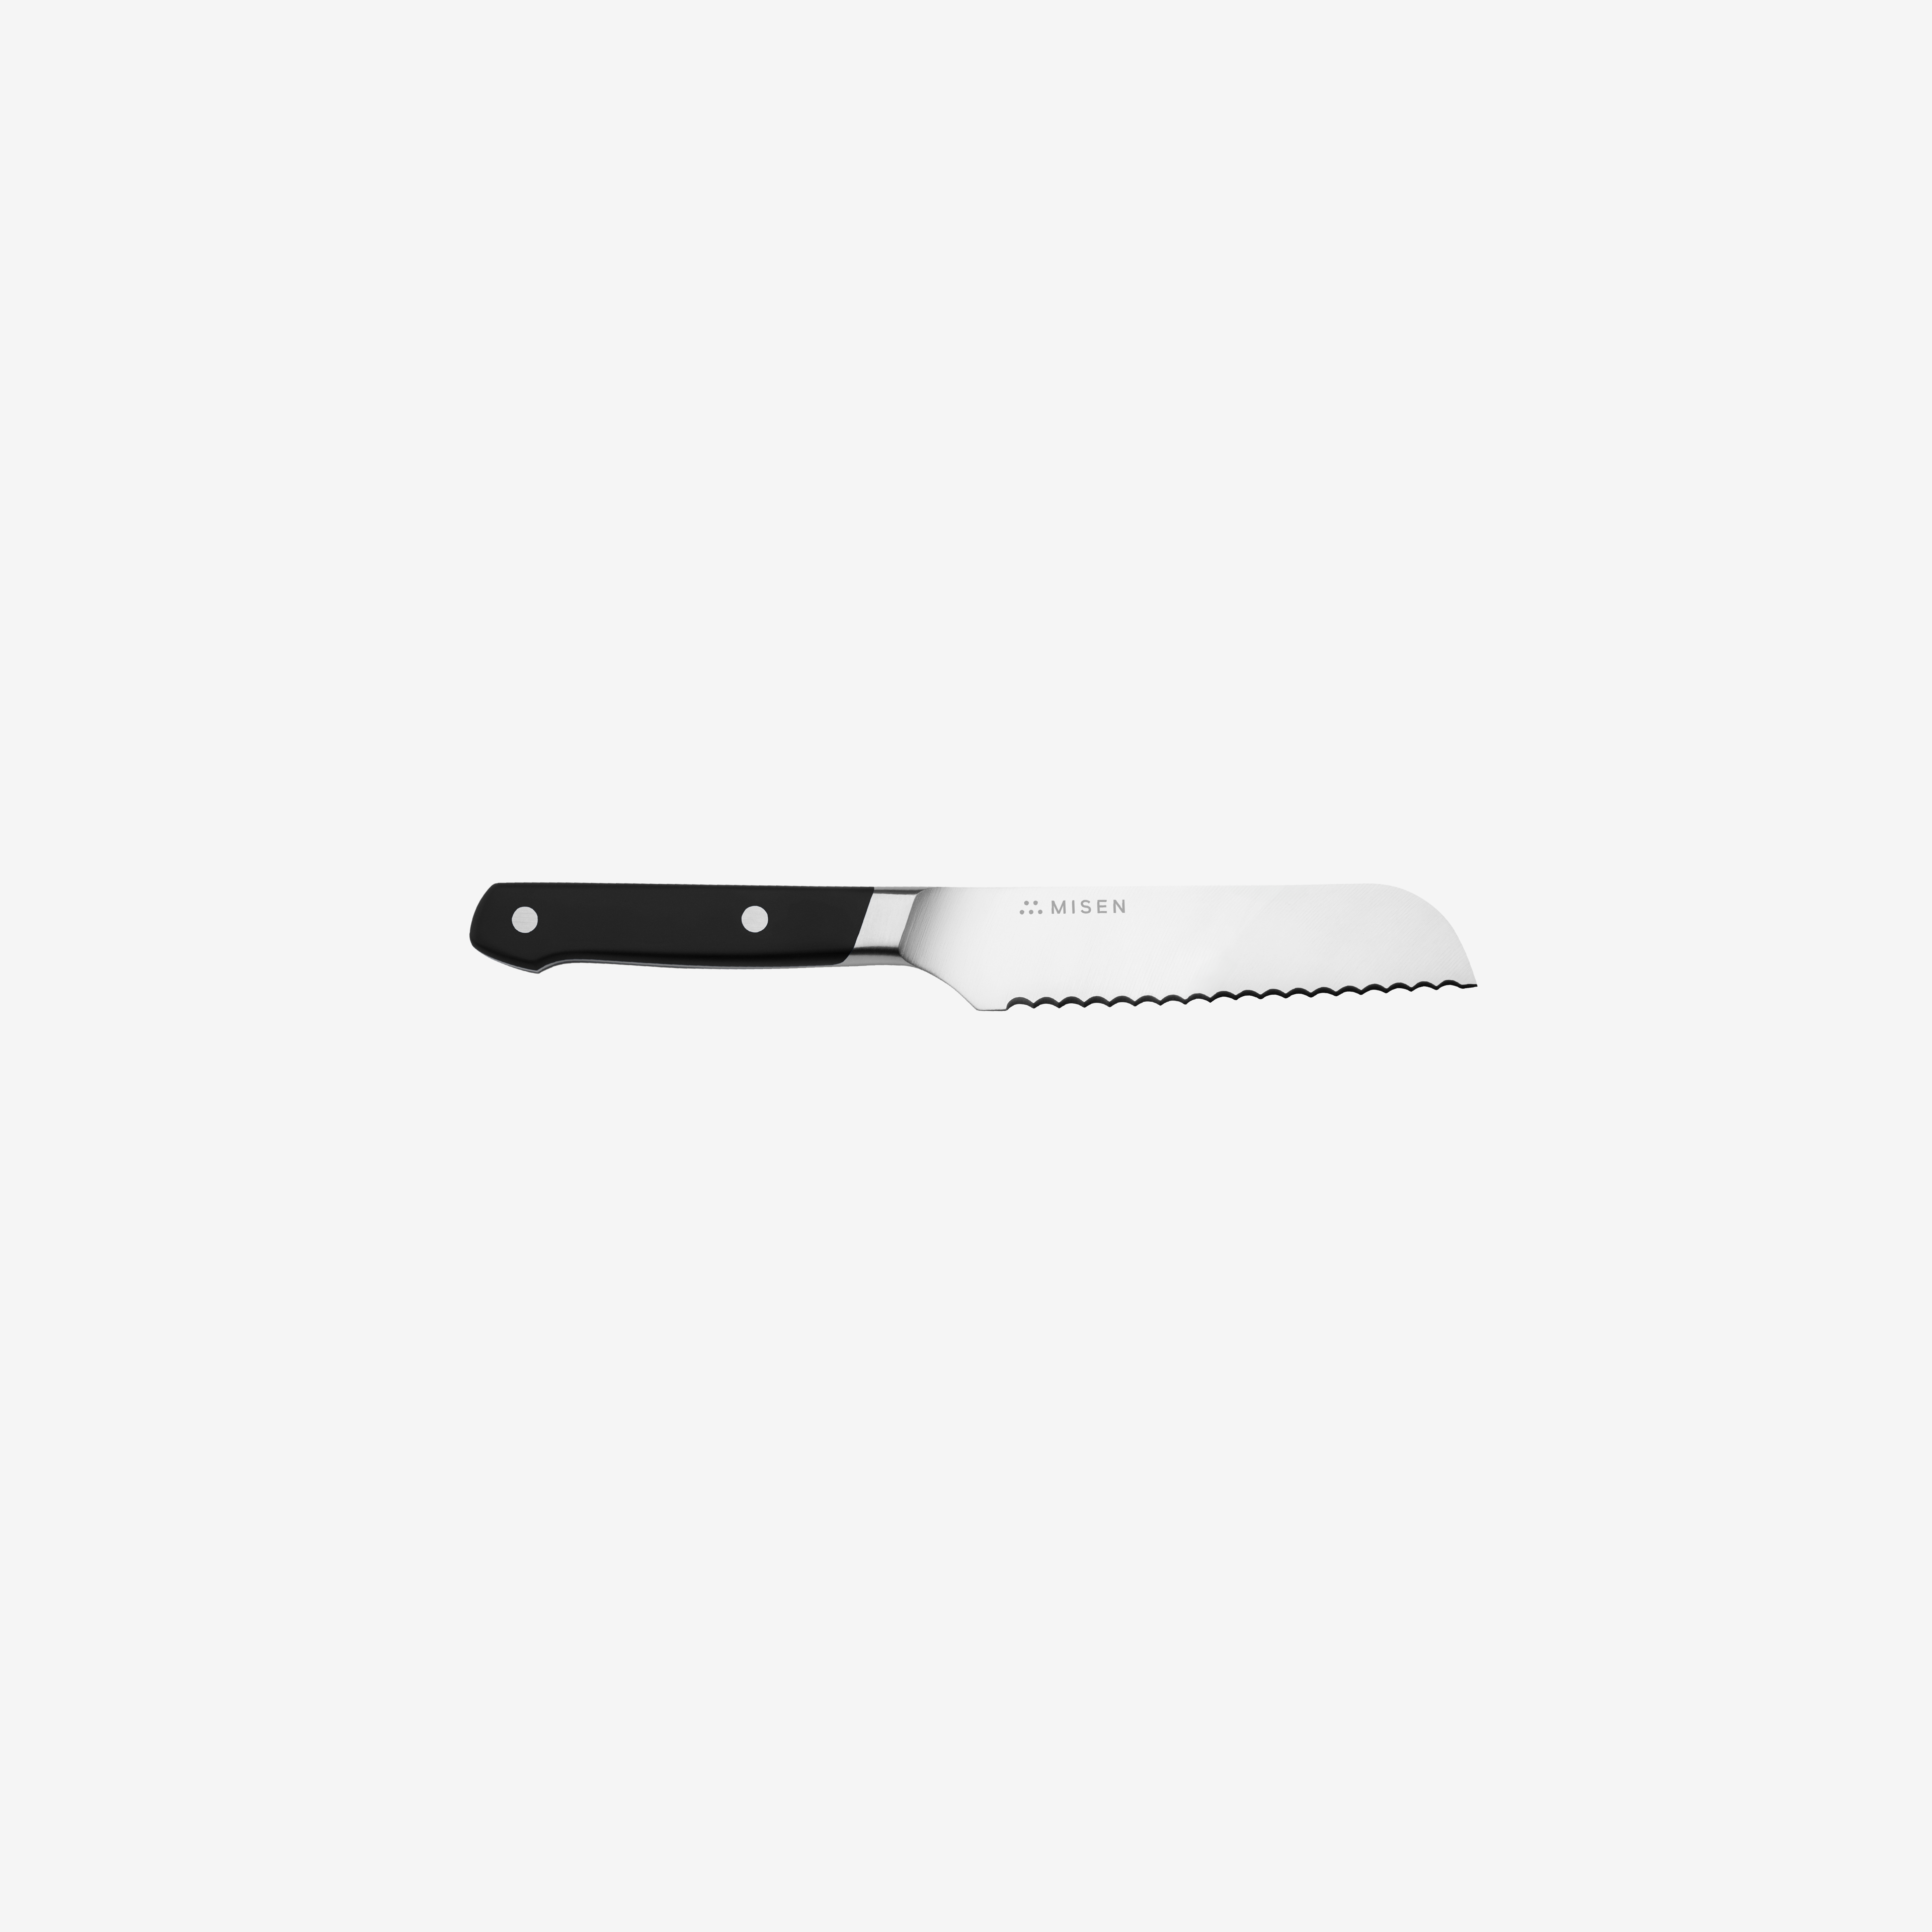 5 inch Serrated Knife